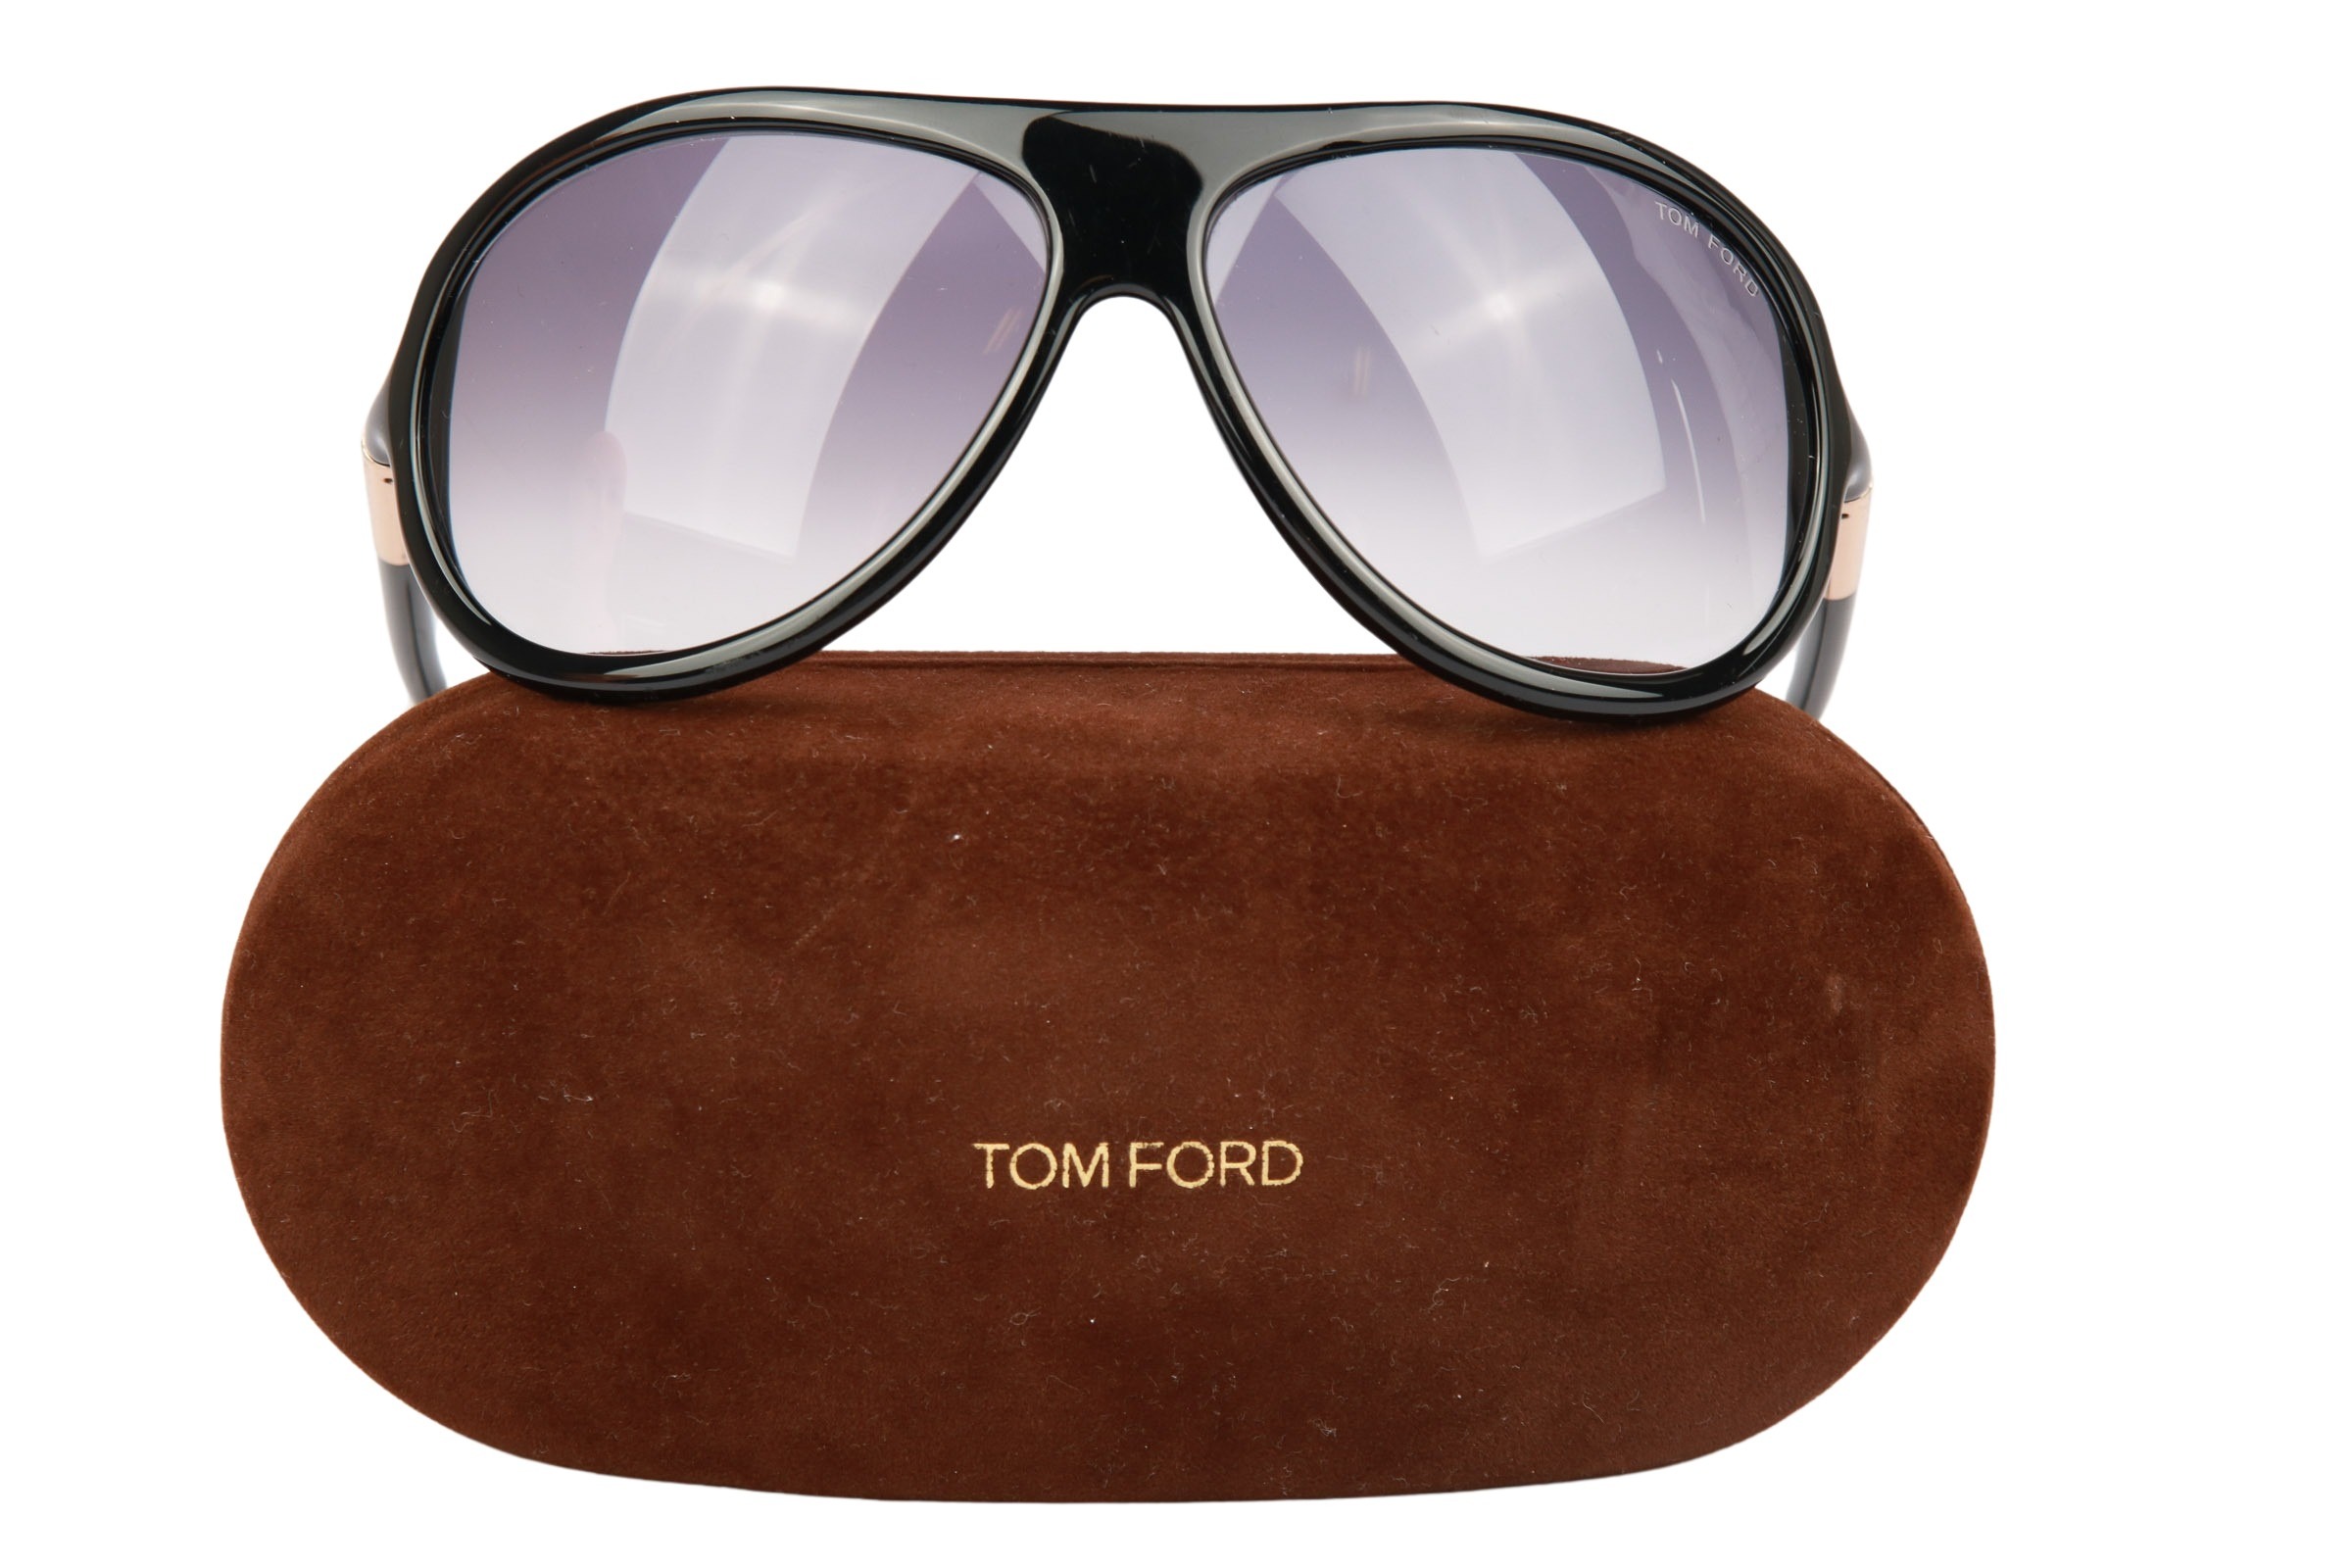 Tom Ford Handbags & Accessories | Luxussachen.com